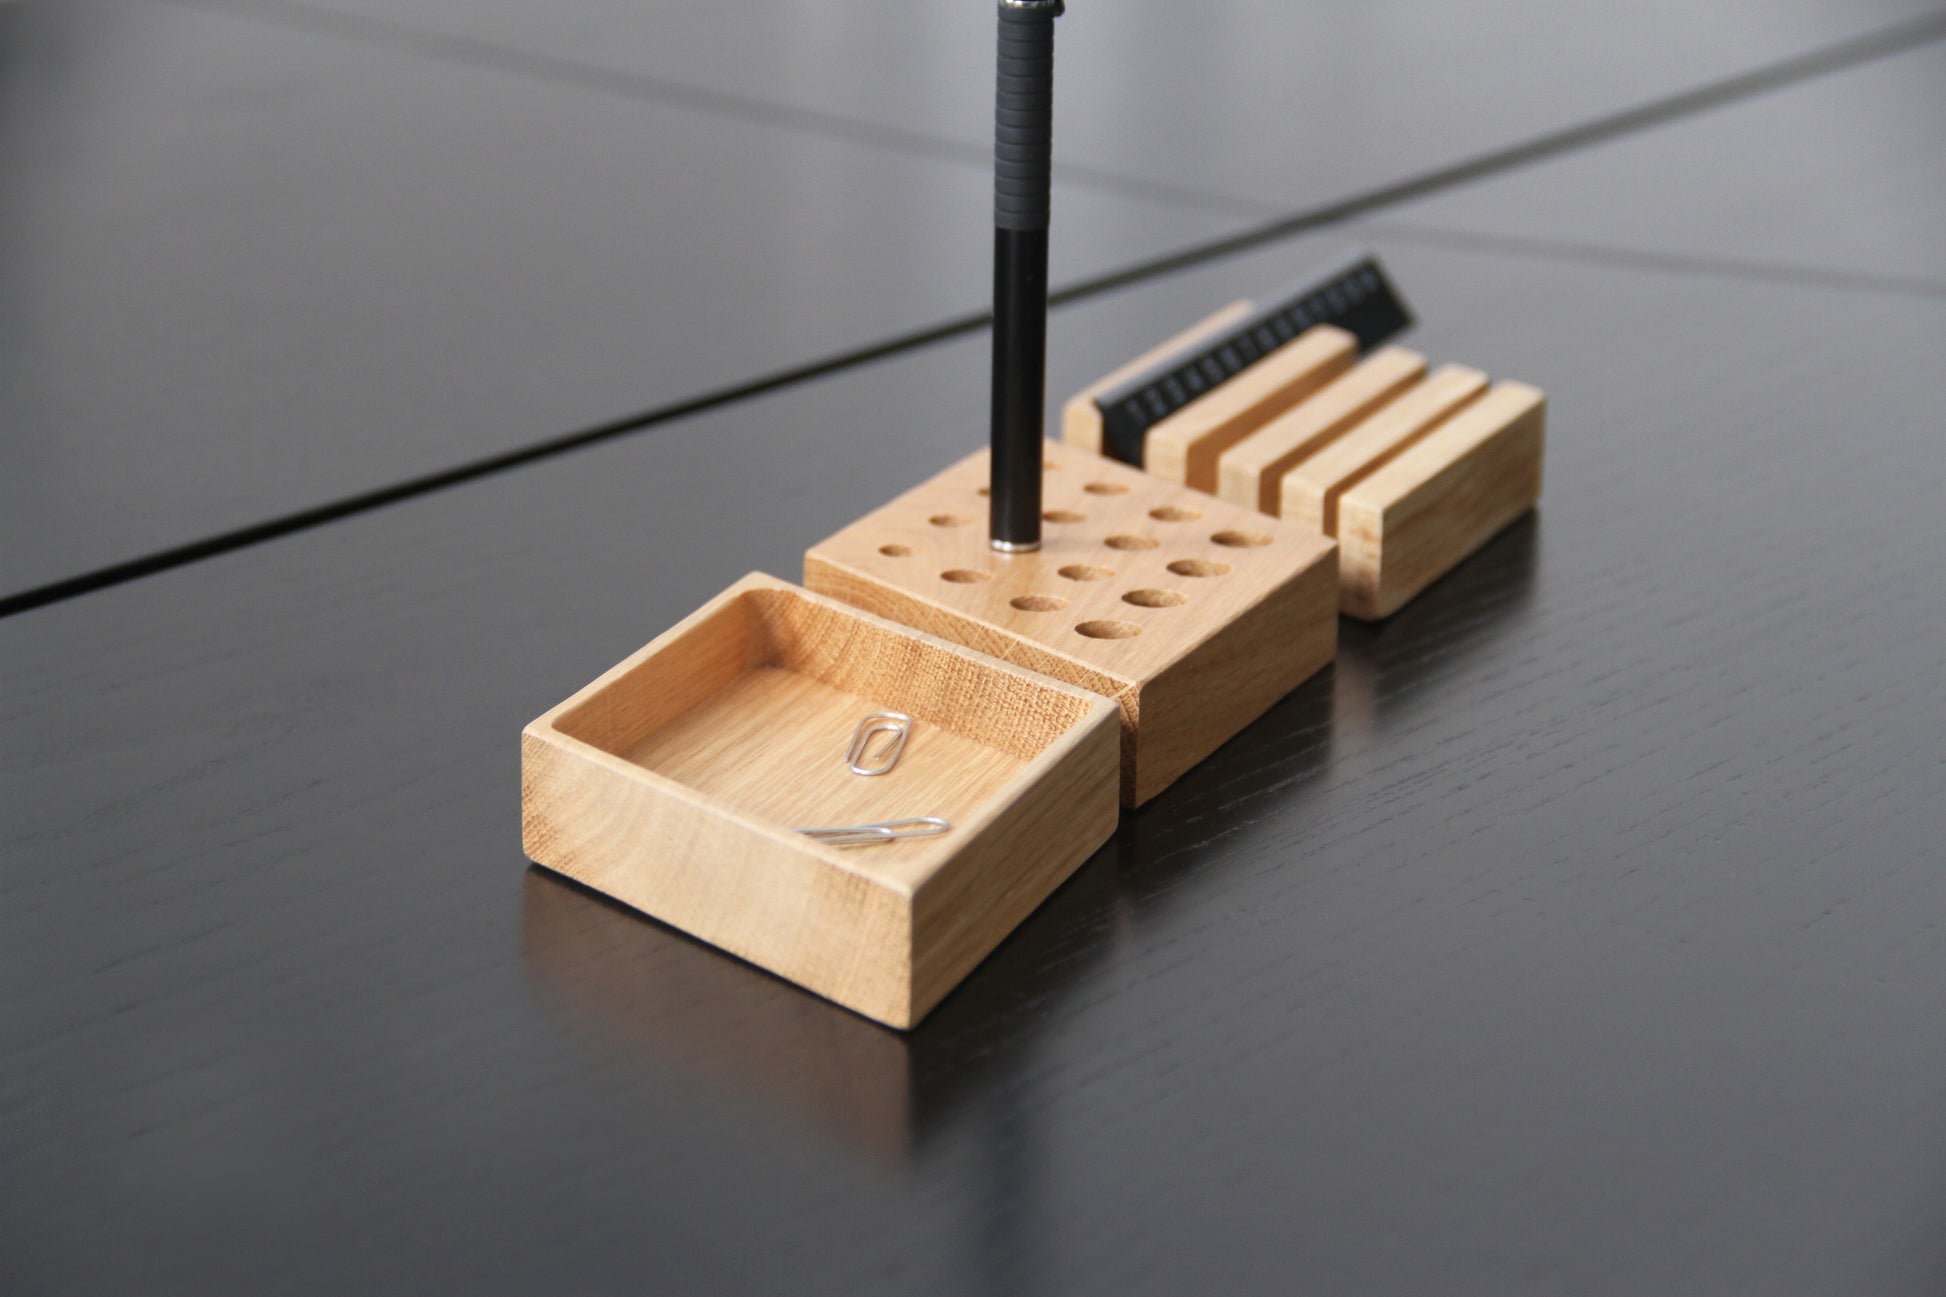 kesito organiser split into three on a wooden desk